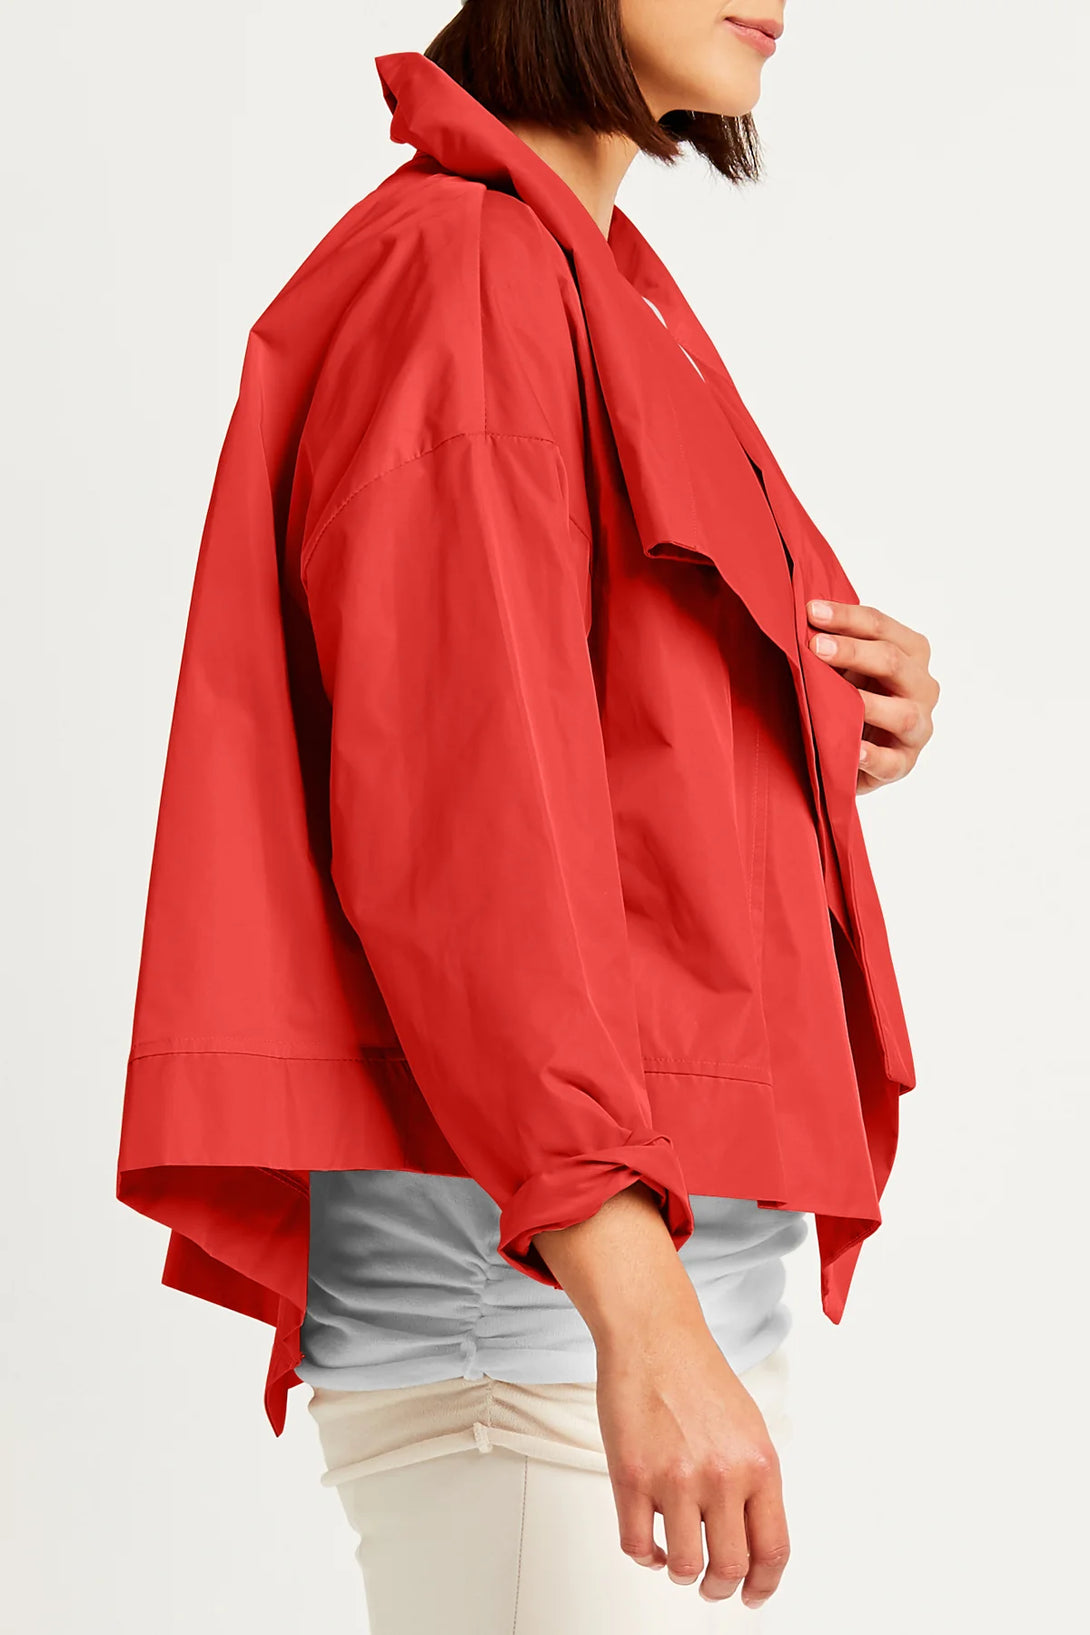 PLANET&nbsp;by Lauren G's Cropped Asymmetrical Jacket Cherry